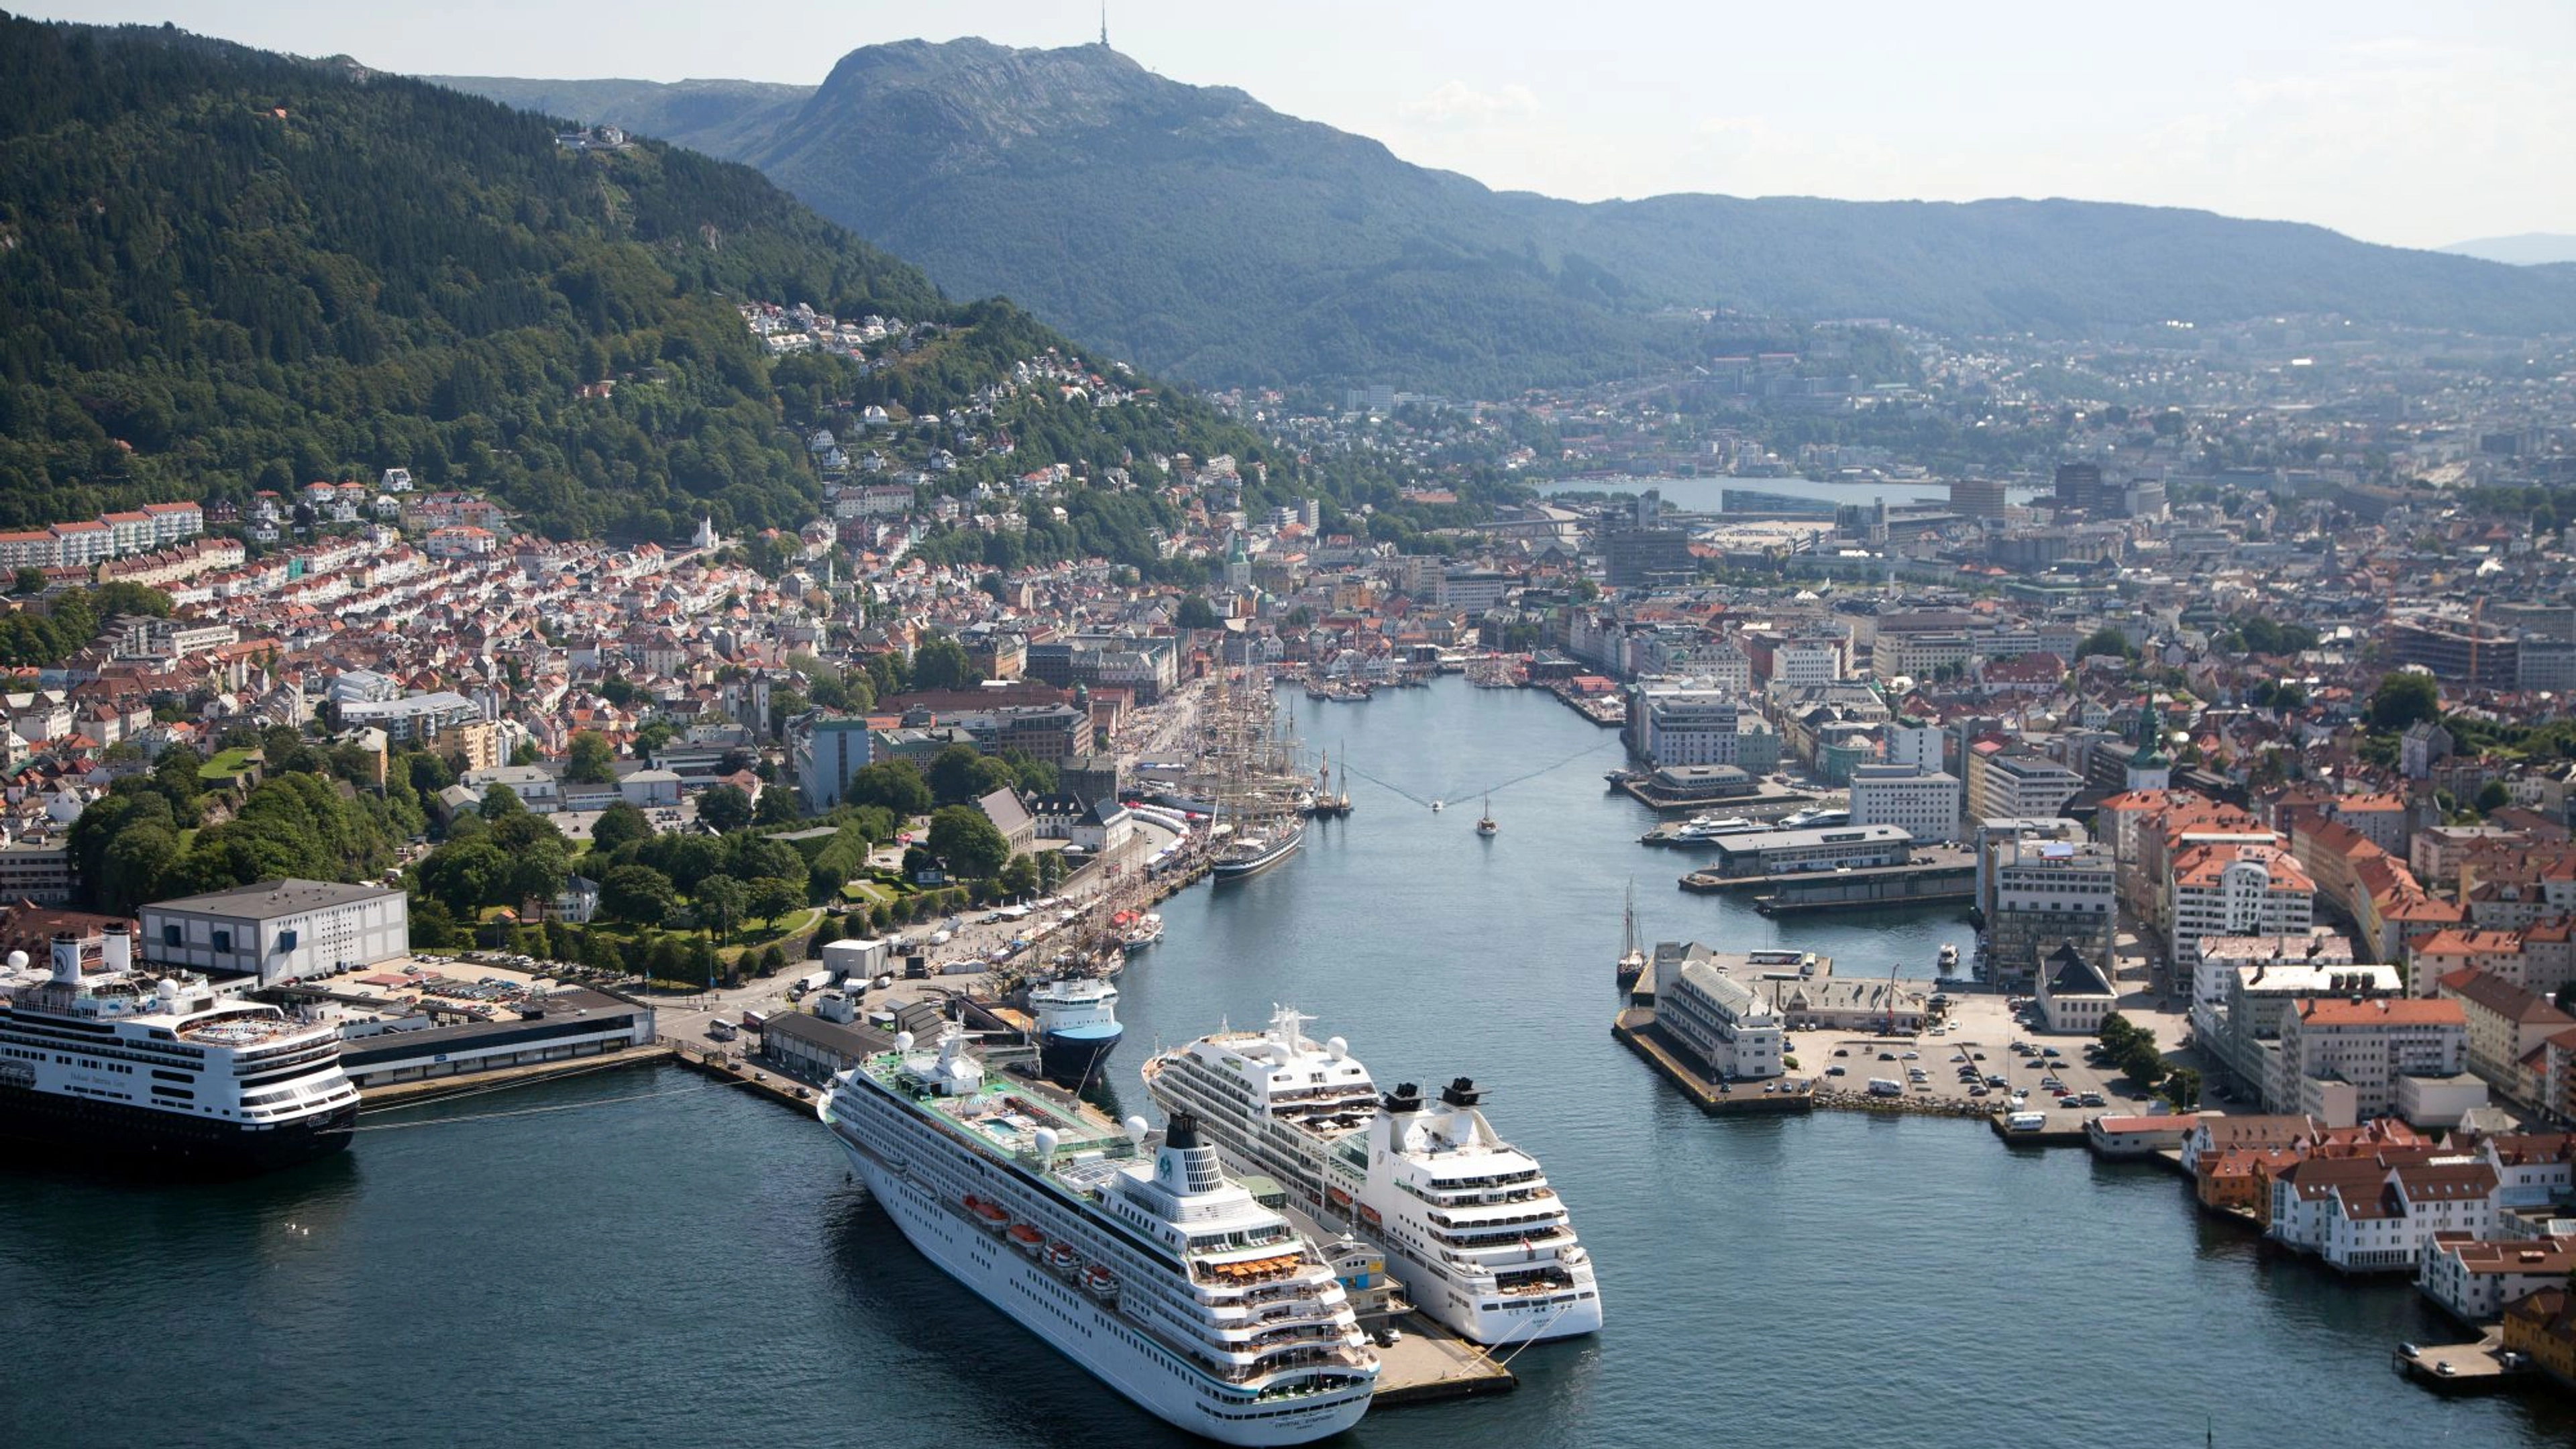 The Bergen bay, Vågen, seen from the air - Bergen Norway 